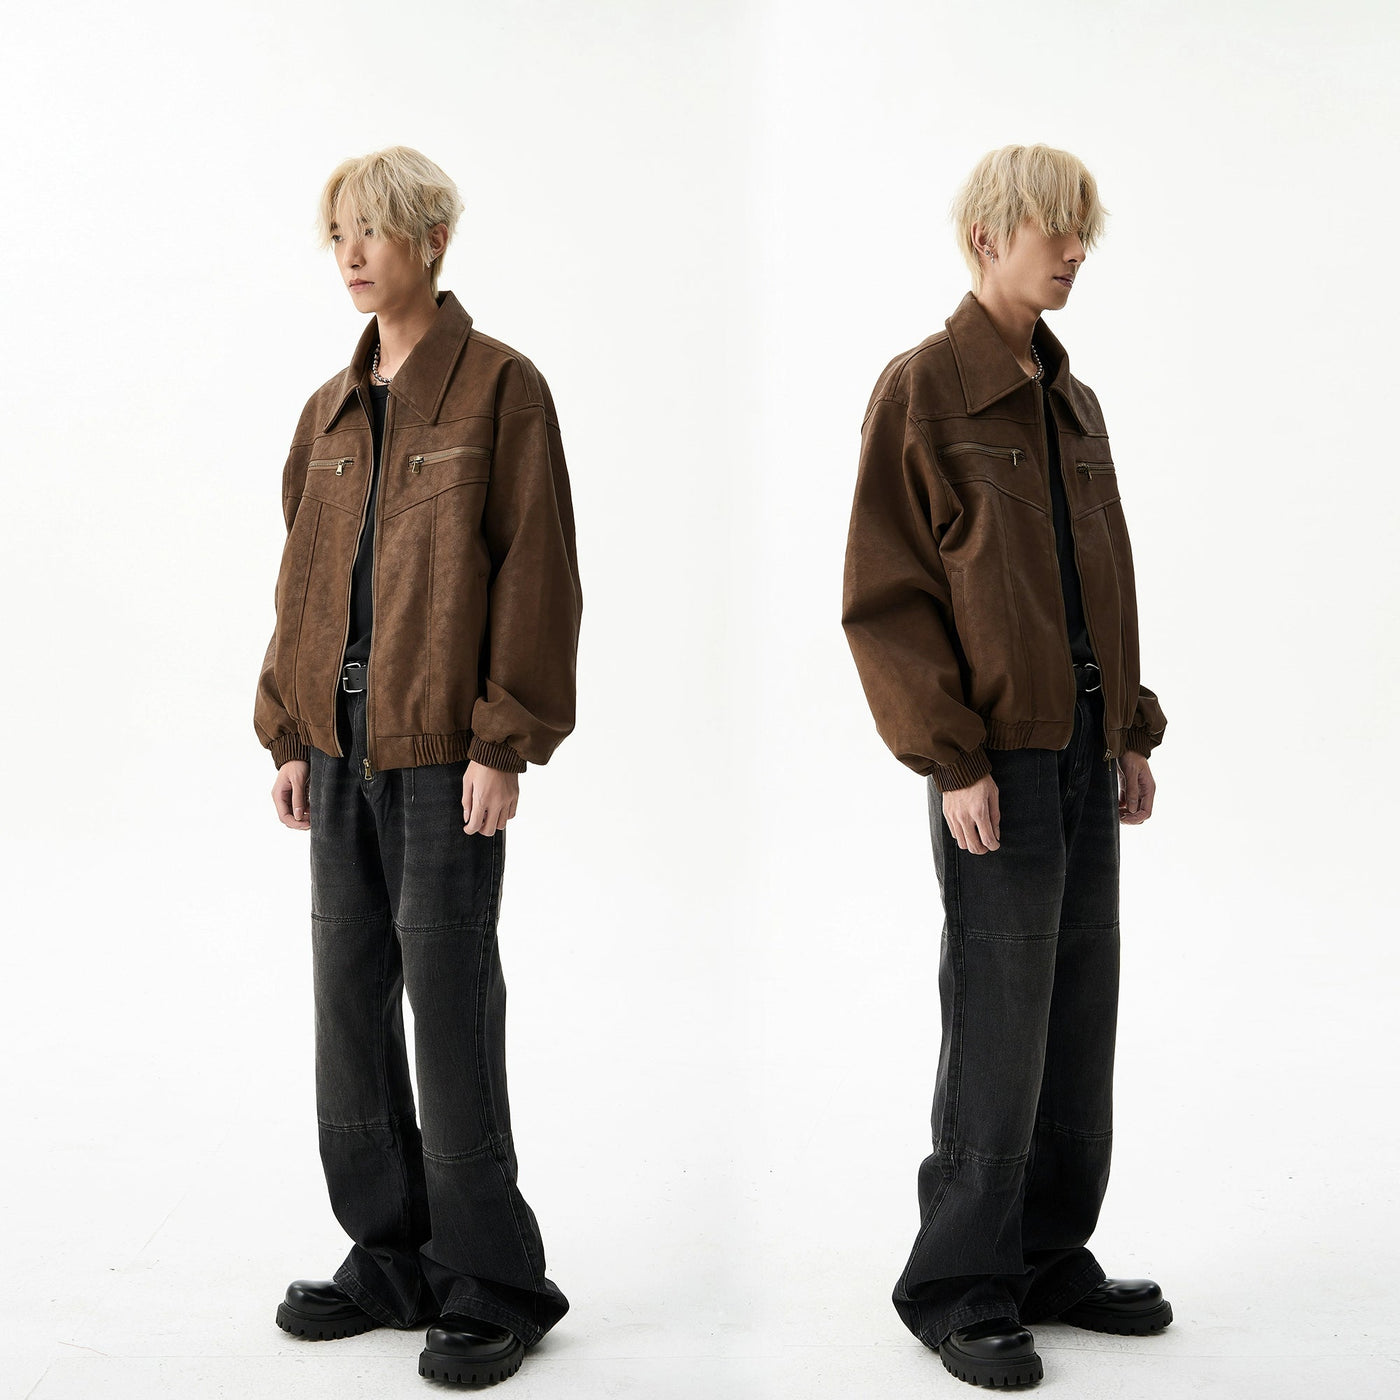 Matte Snowflake Pattern PU Leather Jacket Korean Street Fashion Jacket By Ash Dark Shop Online at OH Vault